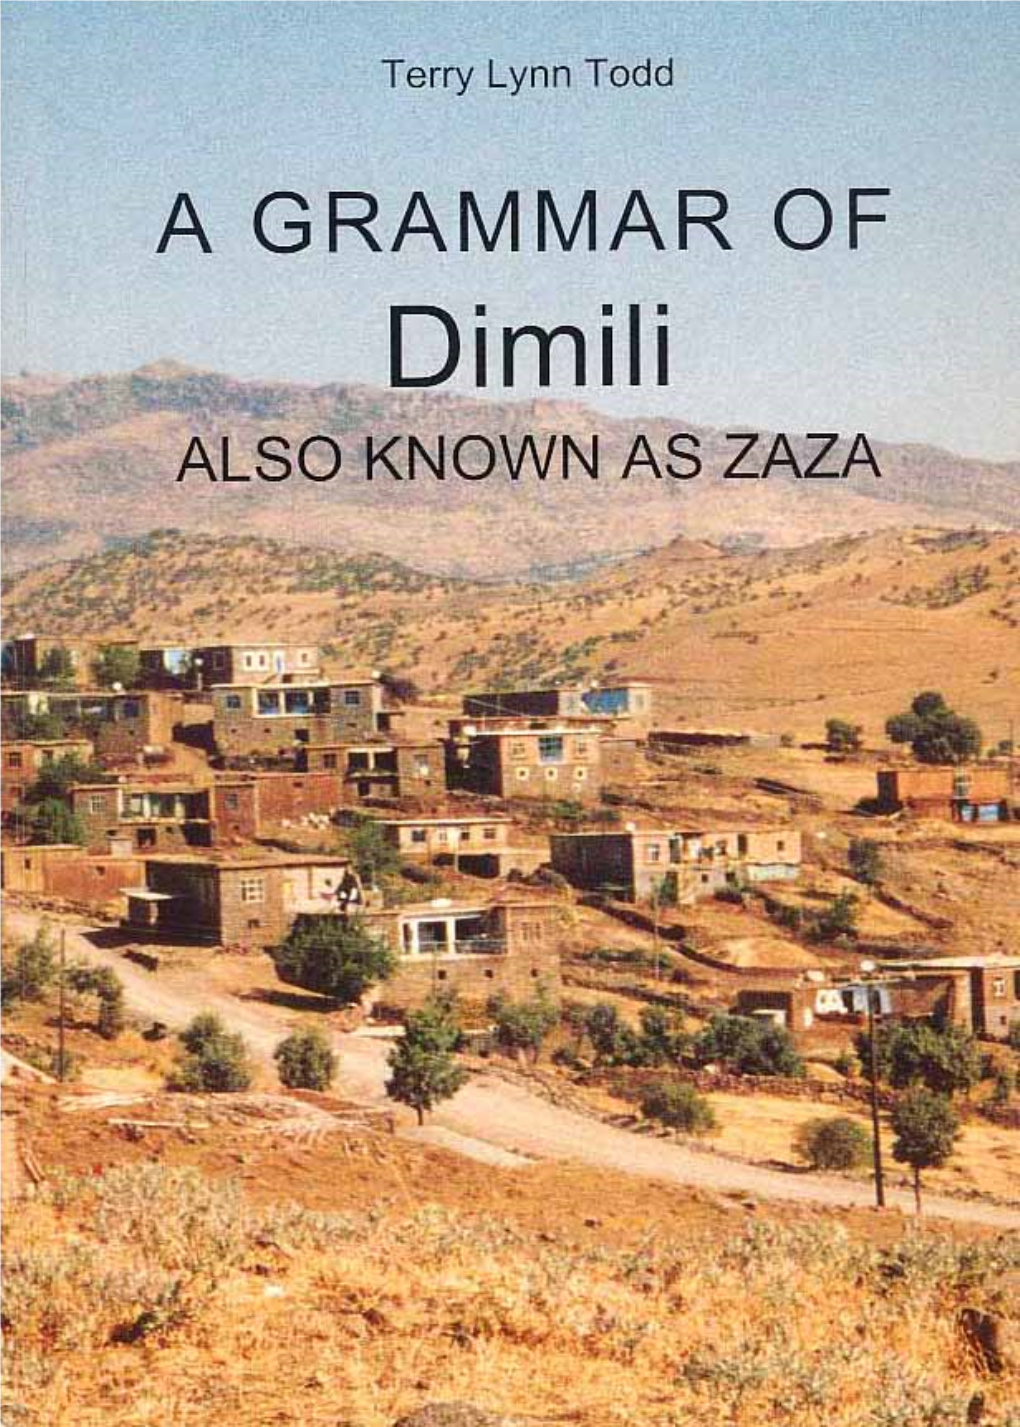 A Grammar of Dimili,Terry Lynn Todd,1985.Pdf